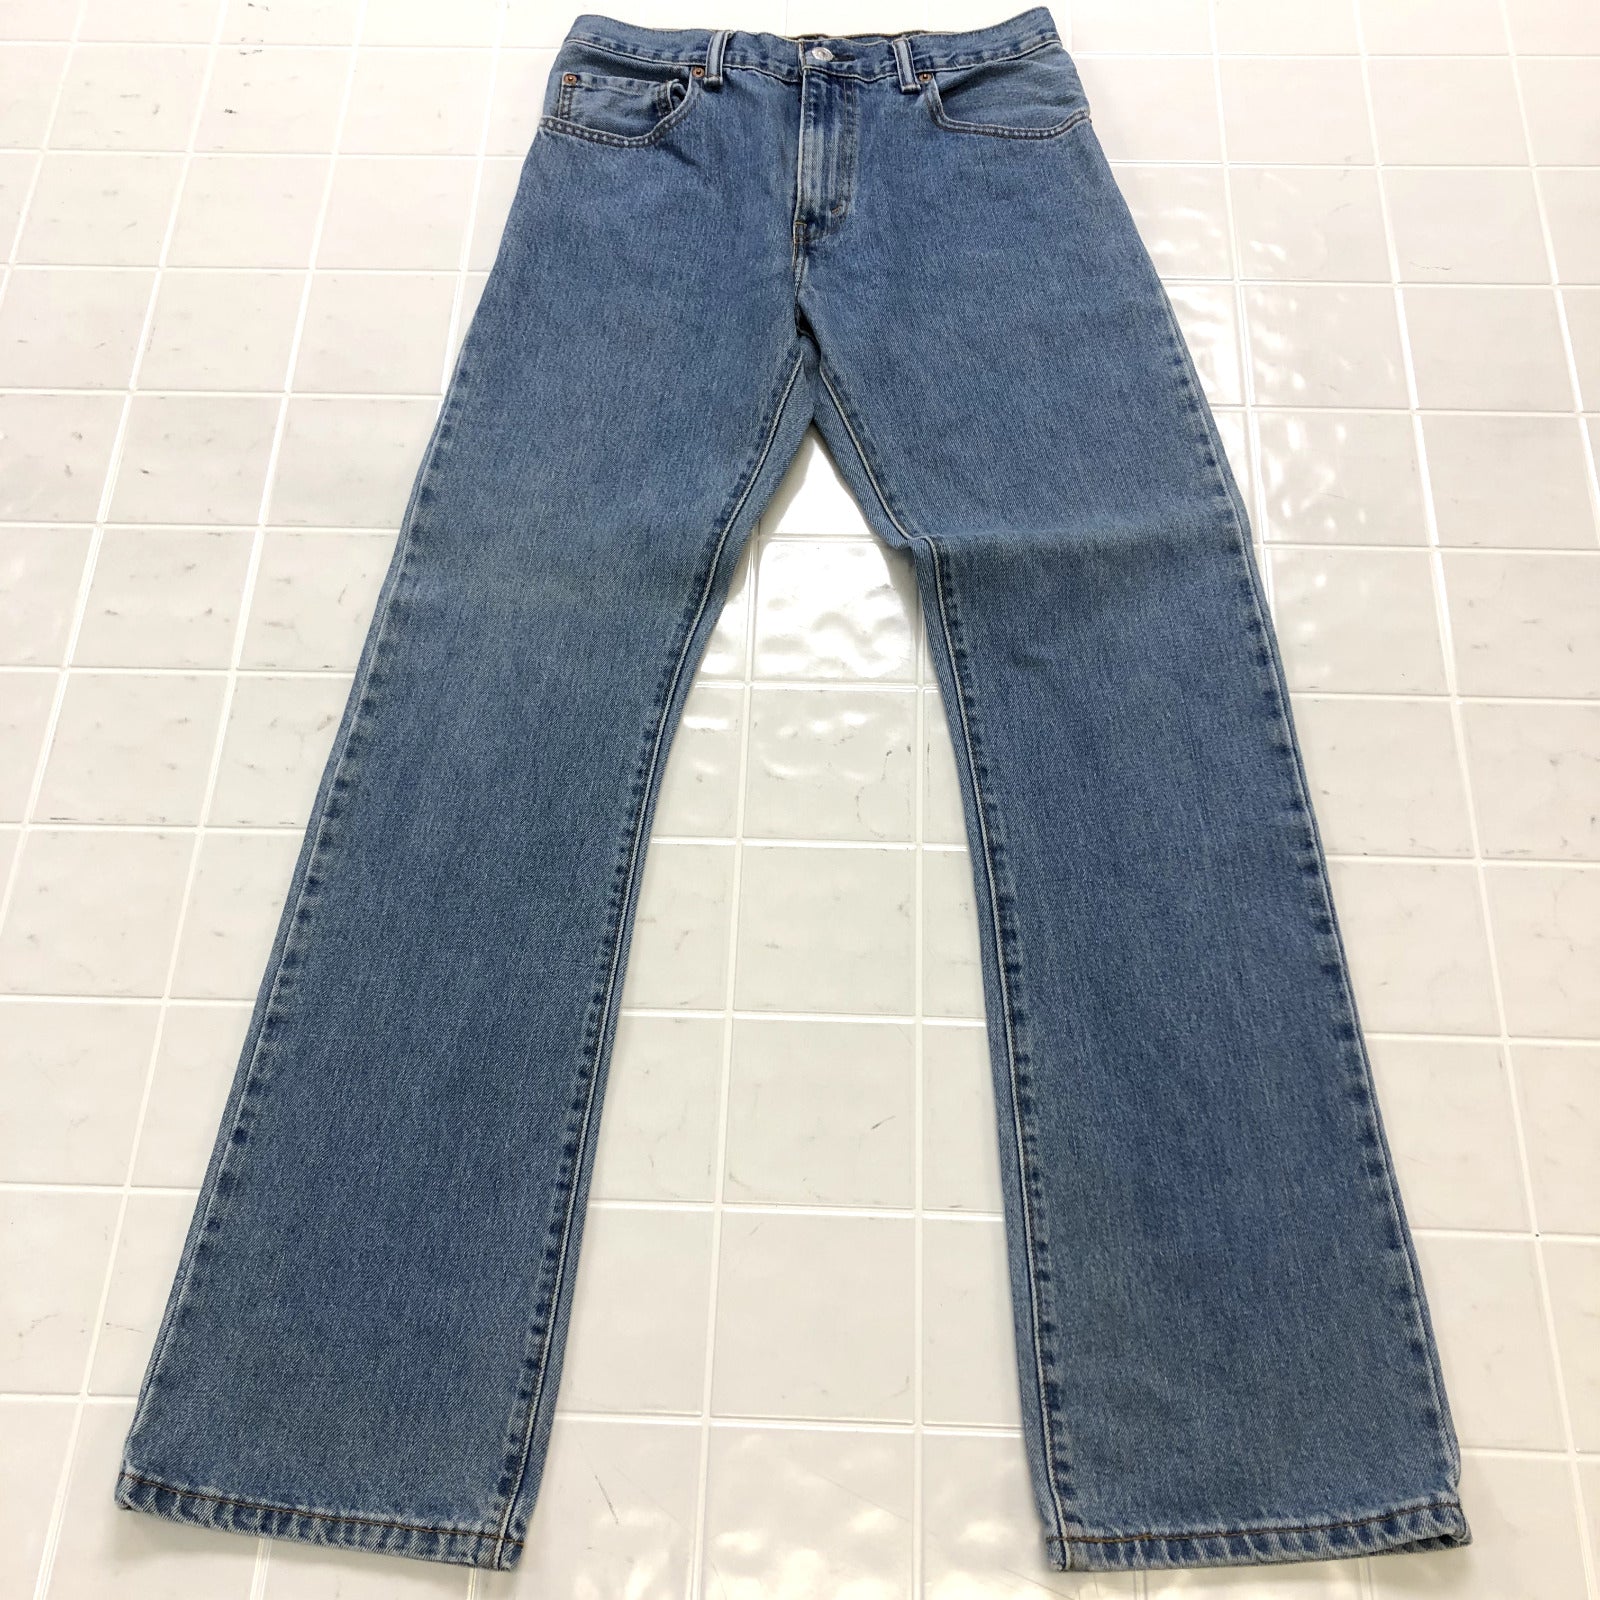 Levi's 517 Blue Denim Flat Front Chino Regular Fit Jeans Adult Size 31X34